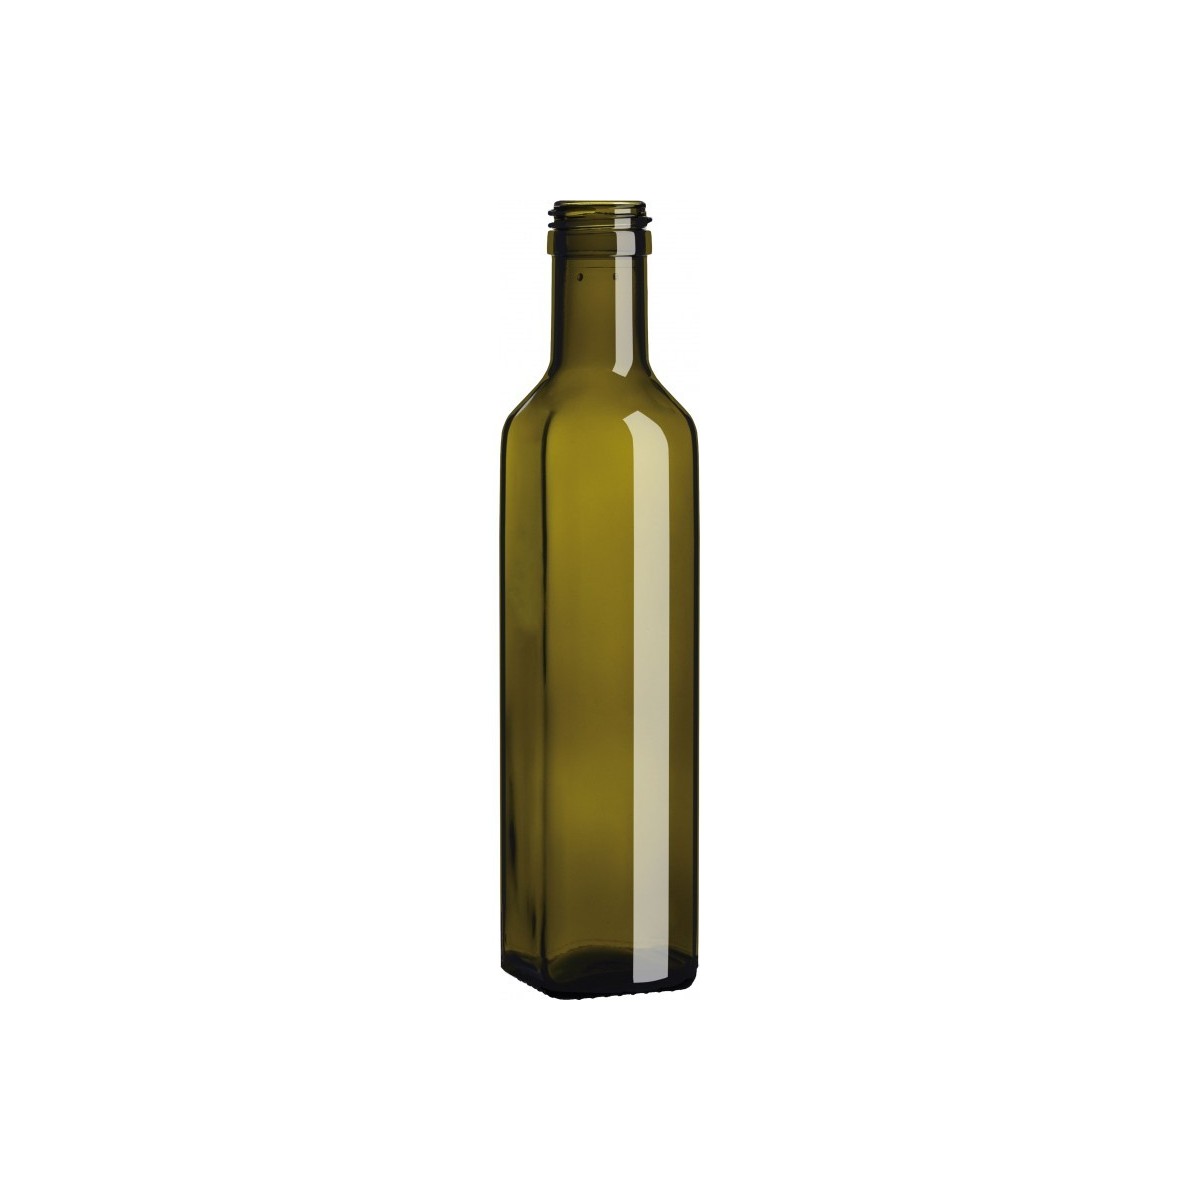 Stiklinis butelis aliejui Marasca, 0,25l.